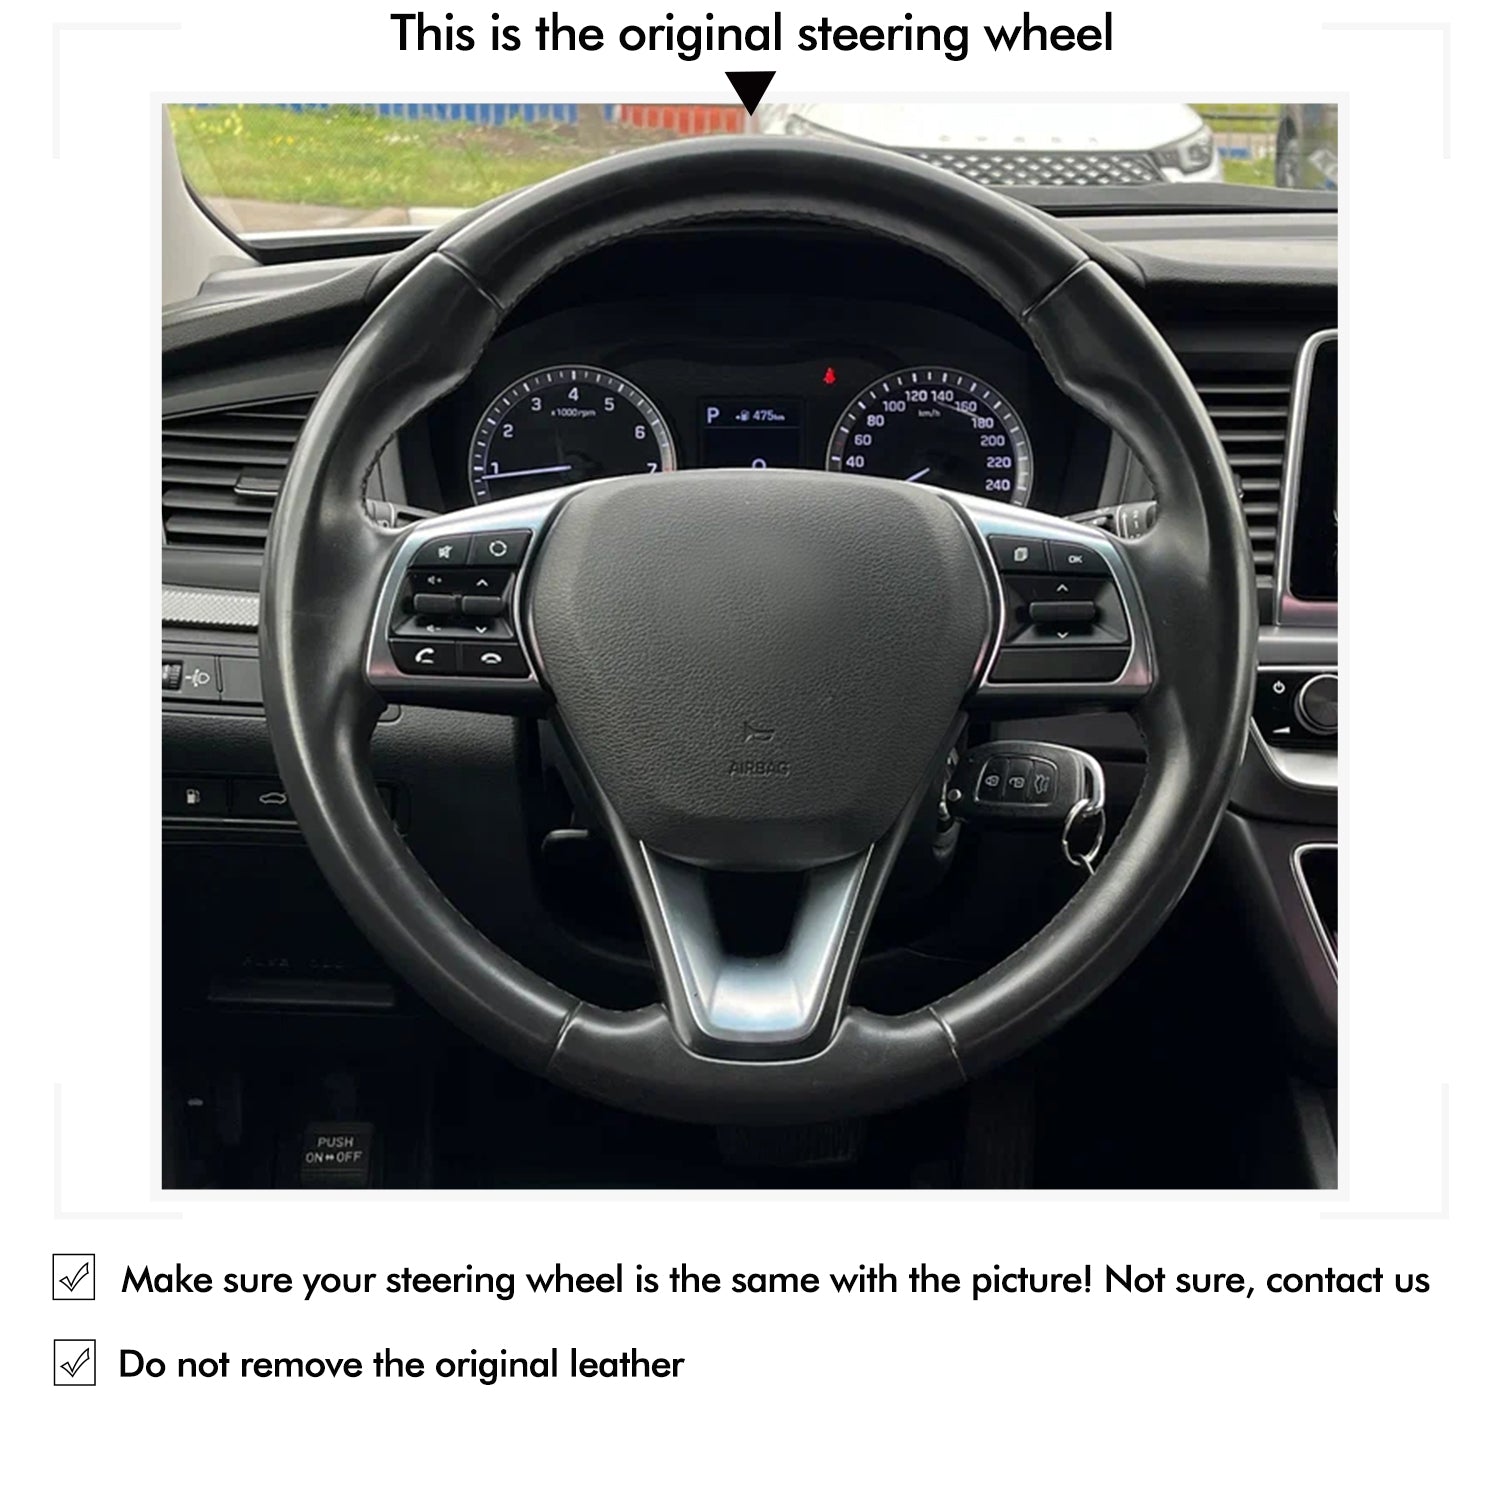 Car Steering Wheel Cover for Hyundai Sonata 2014-2019